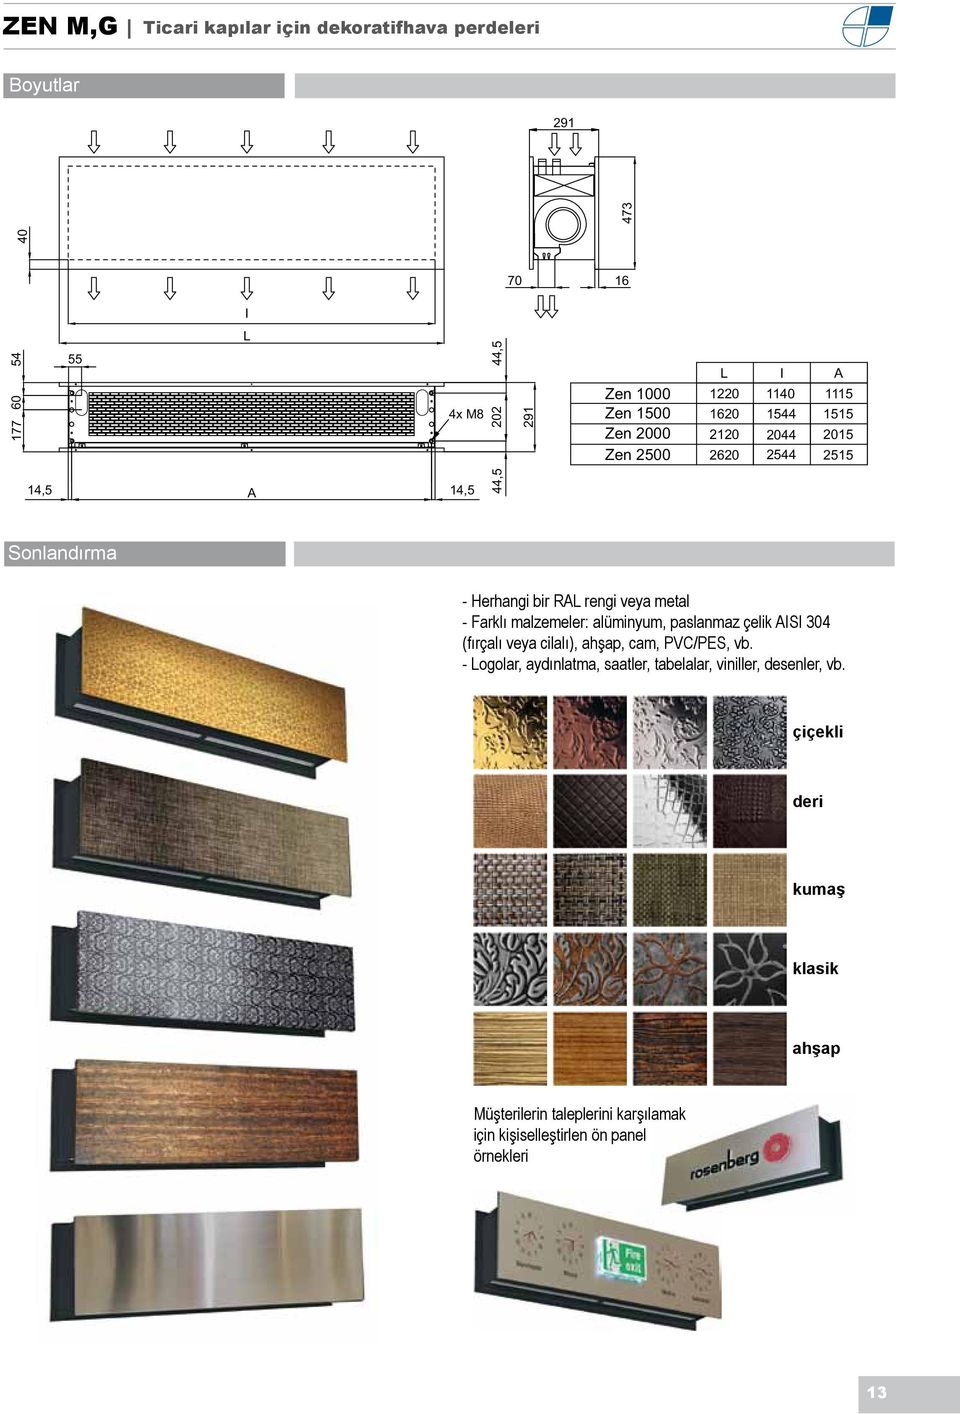 - Farklı malzemeler: alüminyum, paslanmaz çelik AISI 304 (fırçalı veya cilalı), ahşap, cam, PVC/PES, vb.